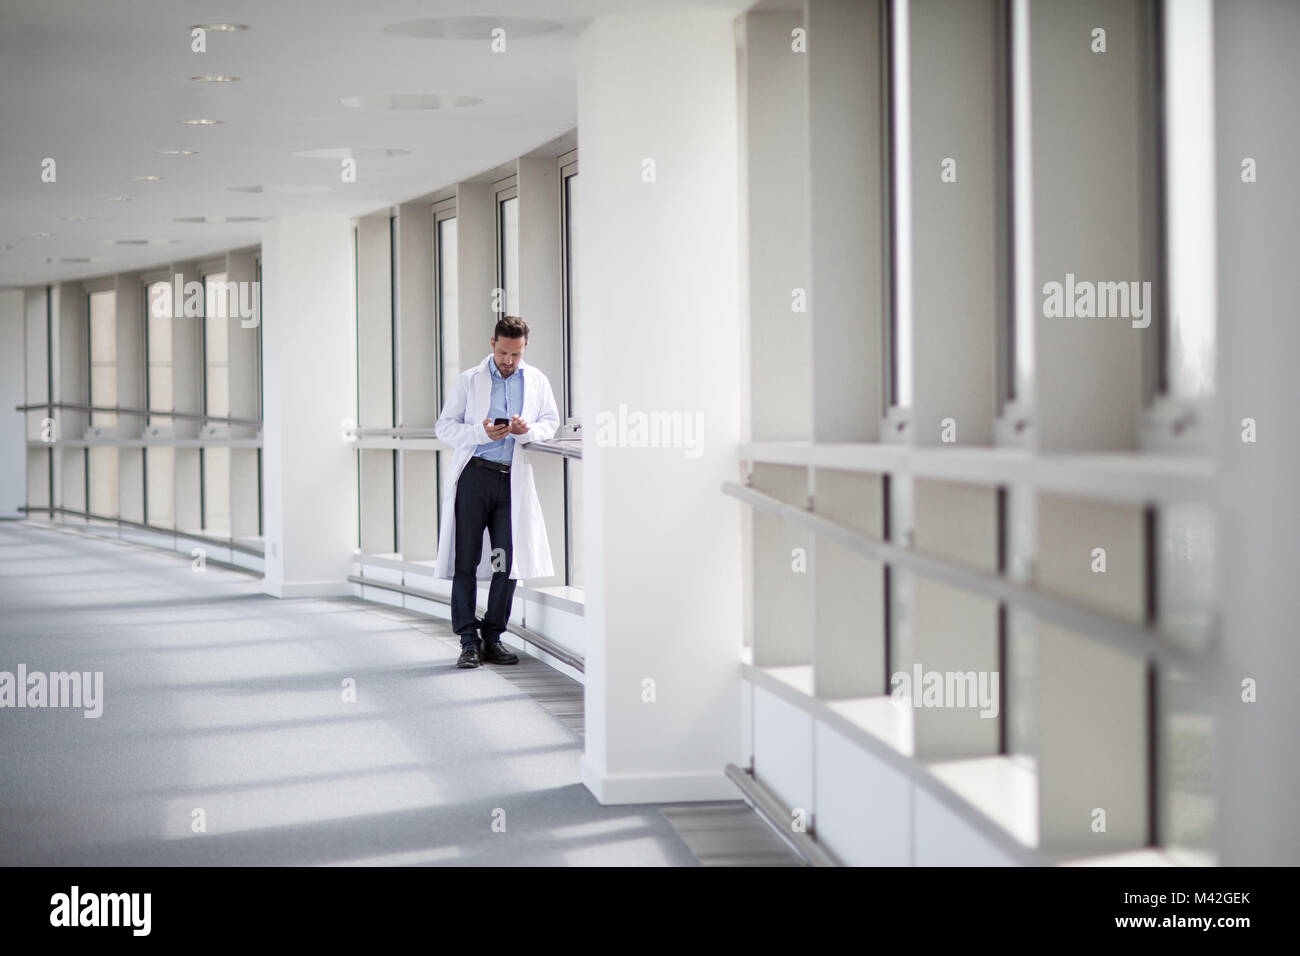 Male medical professional using smartphone in corridor Stock Photo